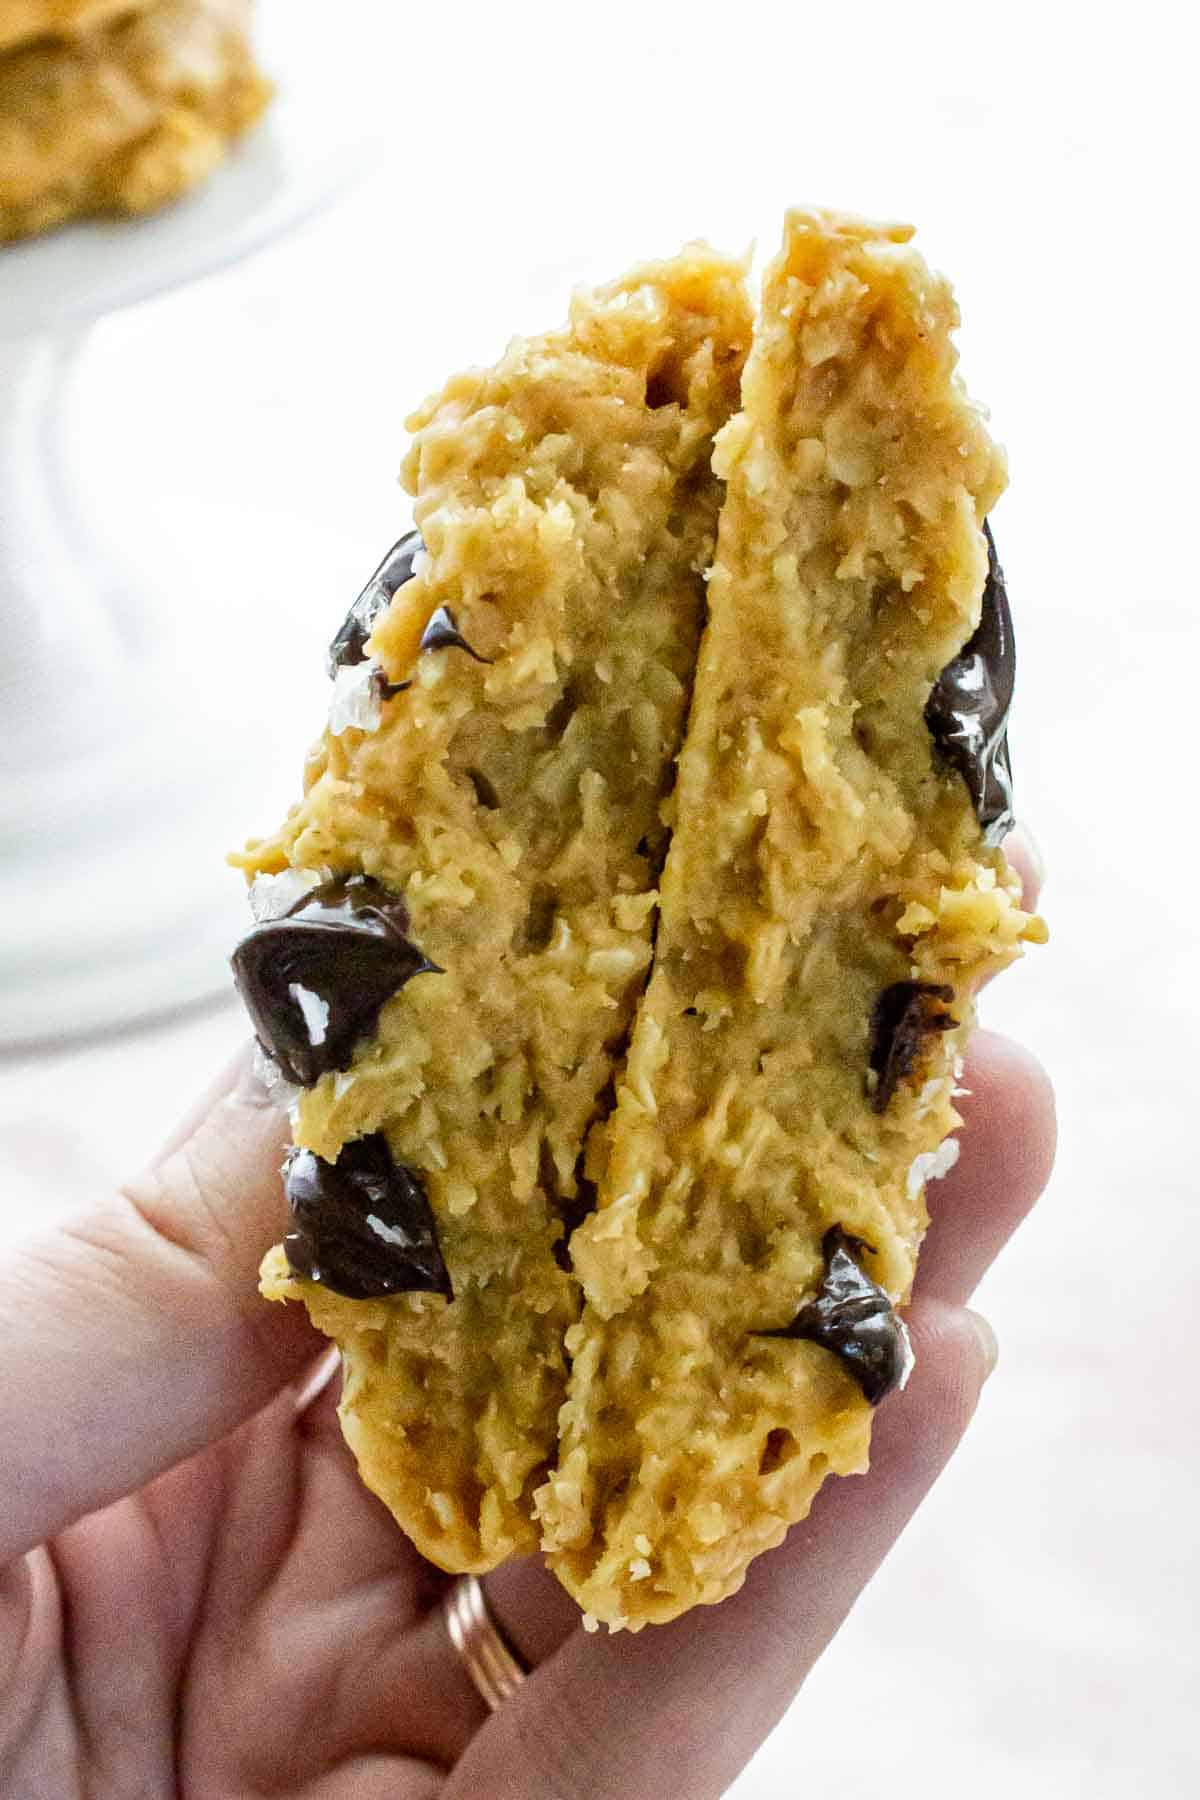 A person holding a partially-eaten no-bake butterscotch cookie.